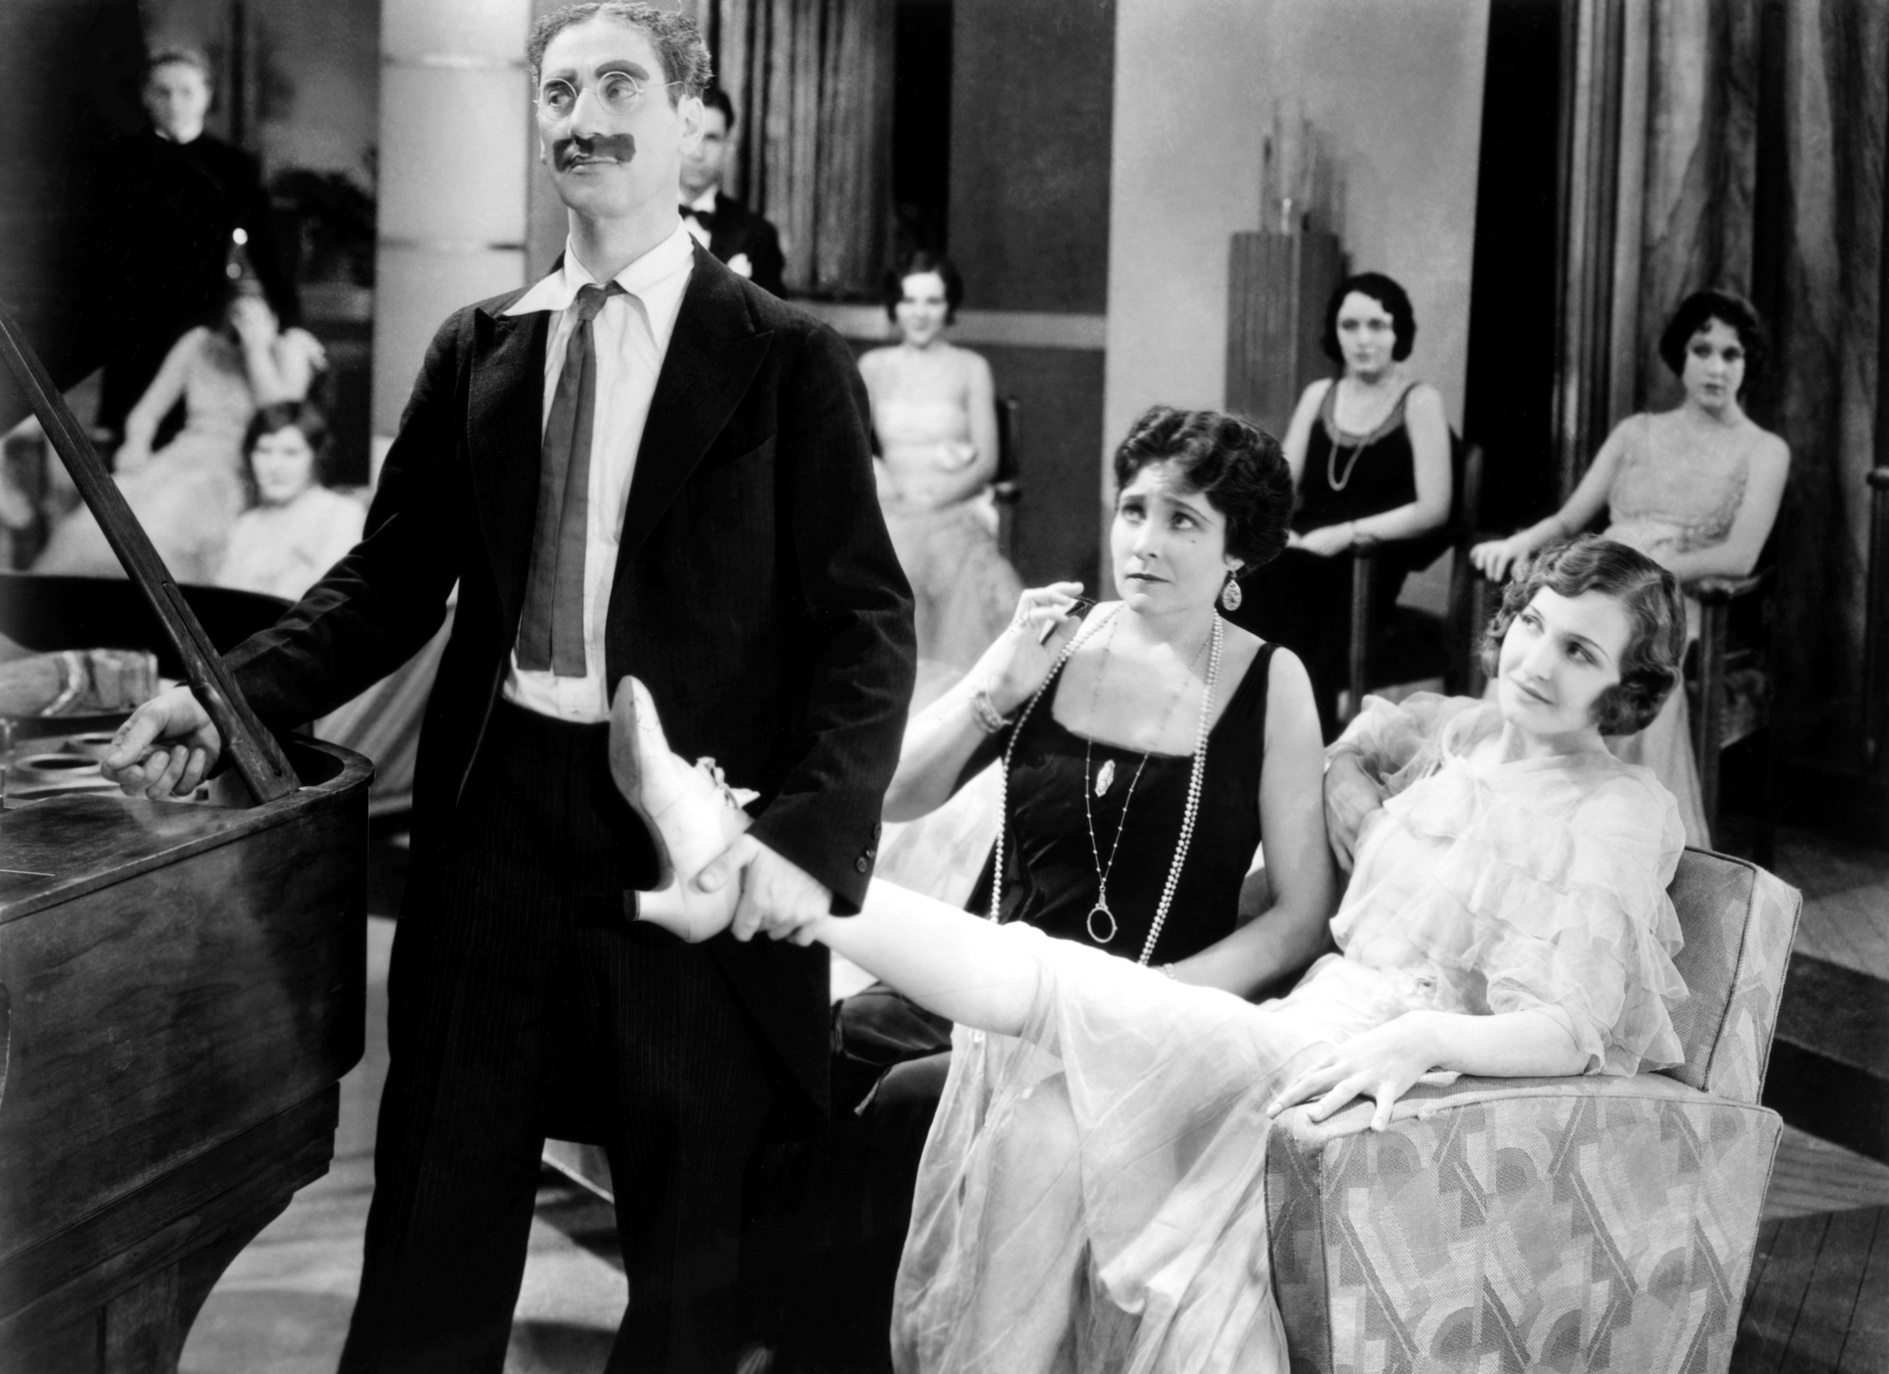 Groucho showssome leg.